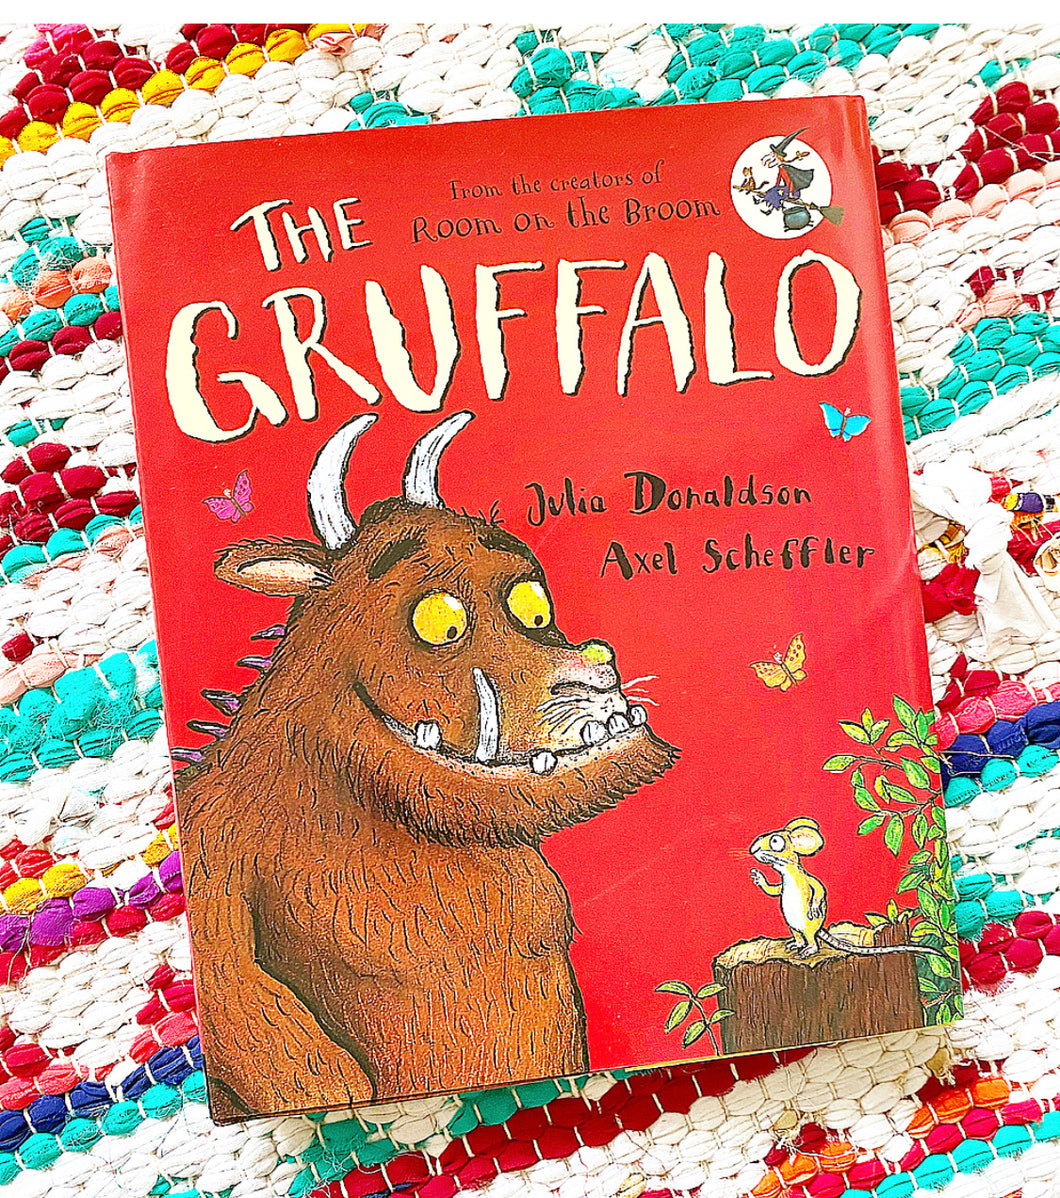 The Gruffalo | Julia Donaldson